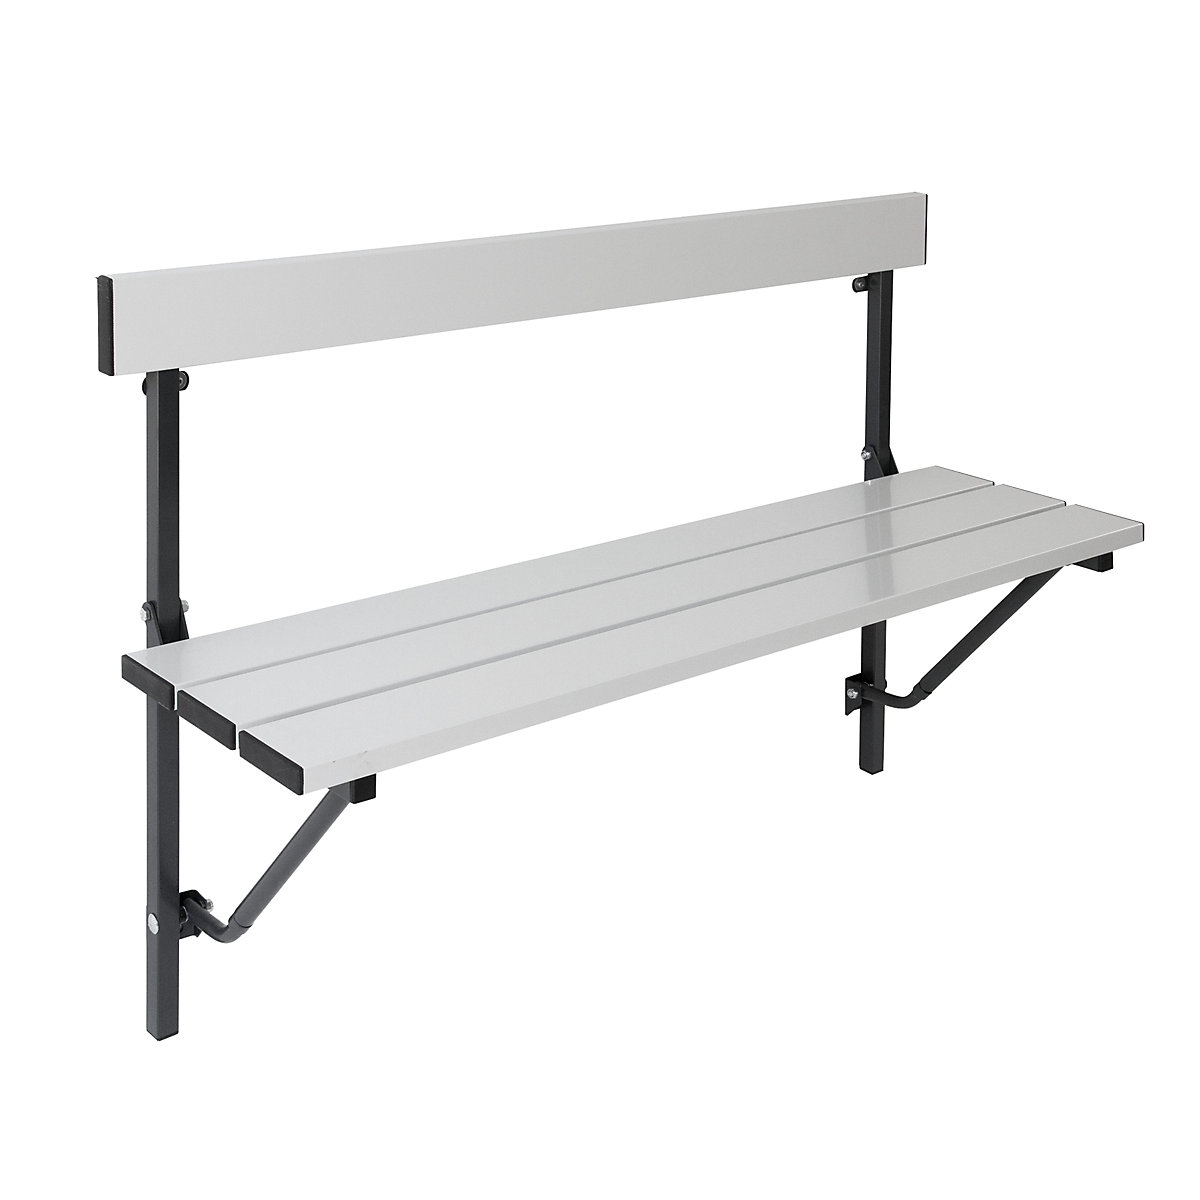 Folding wall-mounted bench – Sypro, folding, length up to 1200 mm, with aluminium slats-2